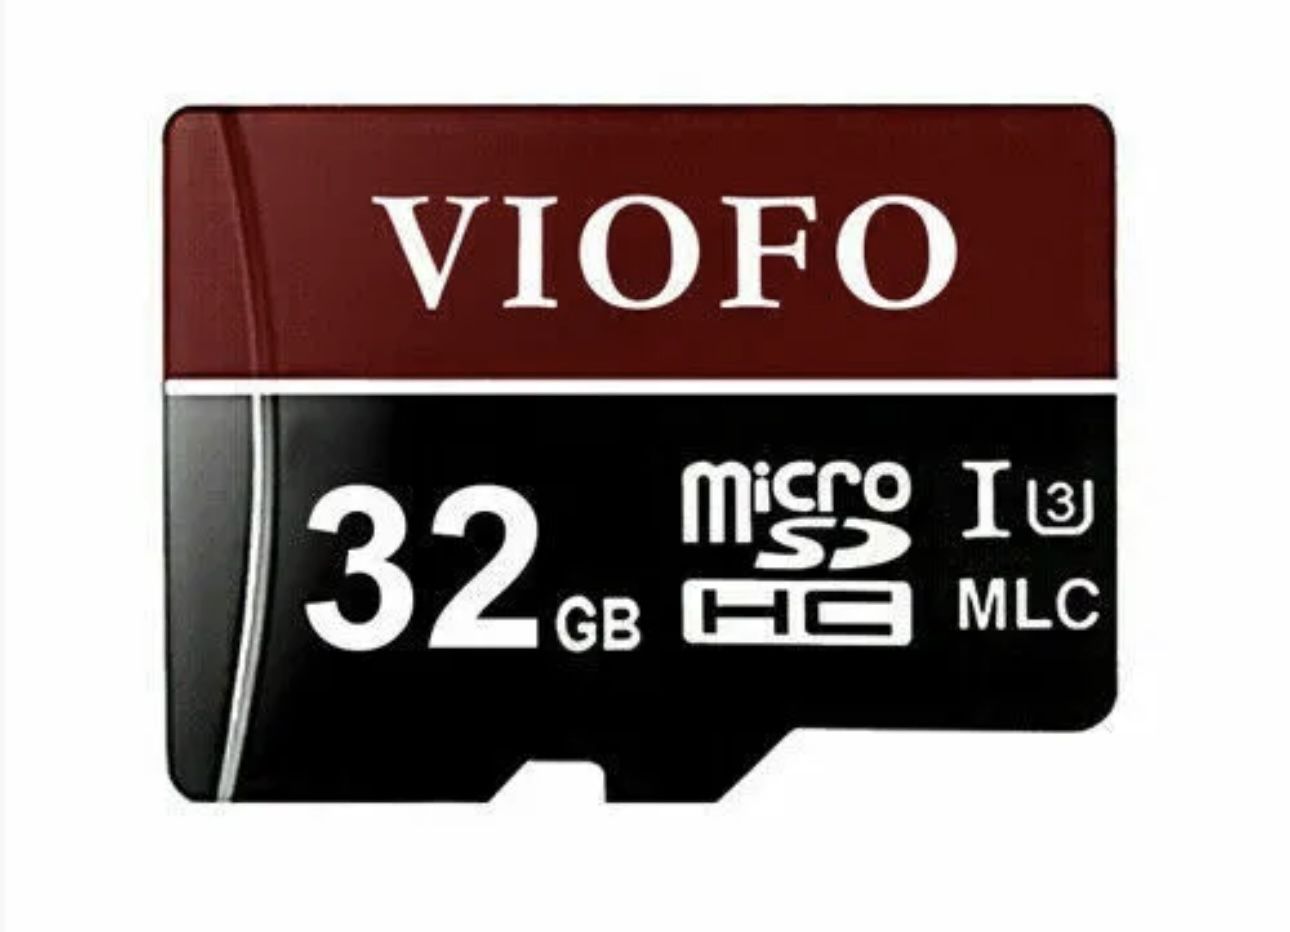 VIOFO 64GB CLASS10 MICRO SDHC SD CARD MEMORY CARD FIR VIOFO DASHCAM